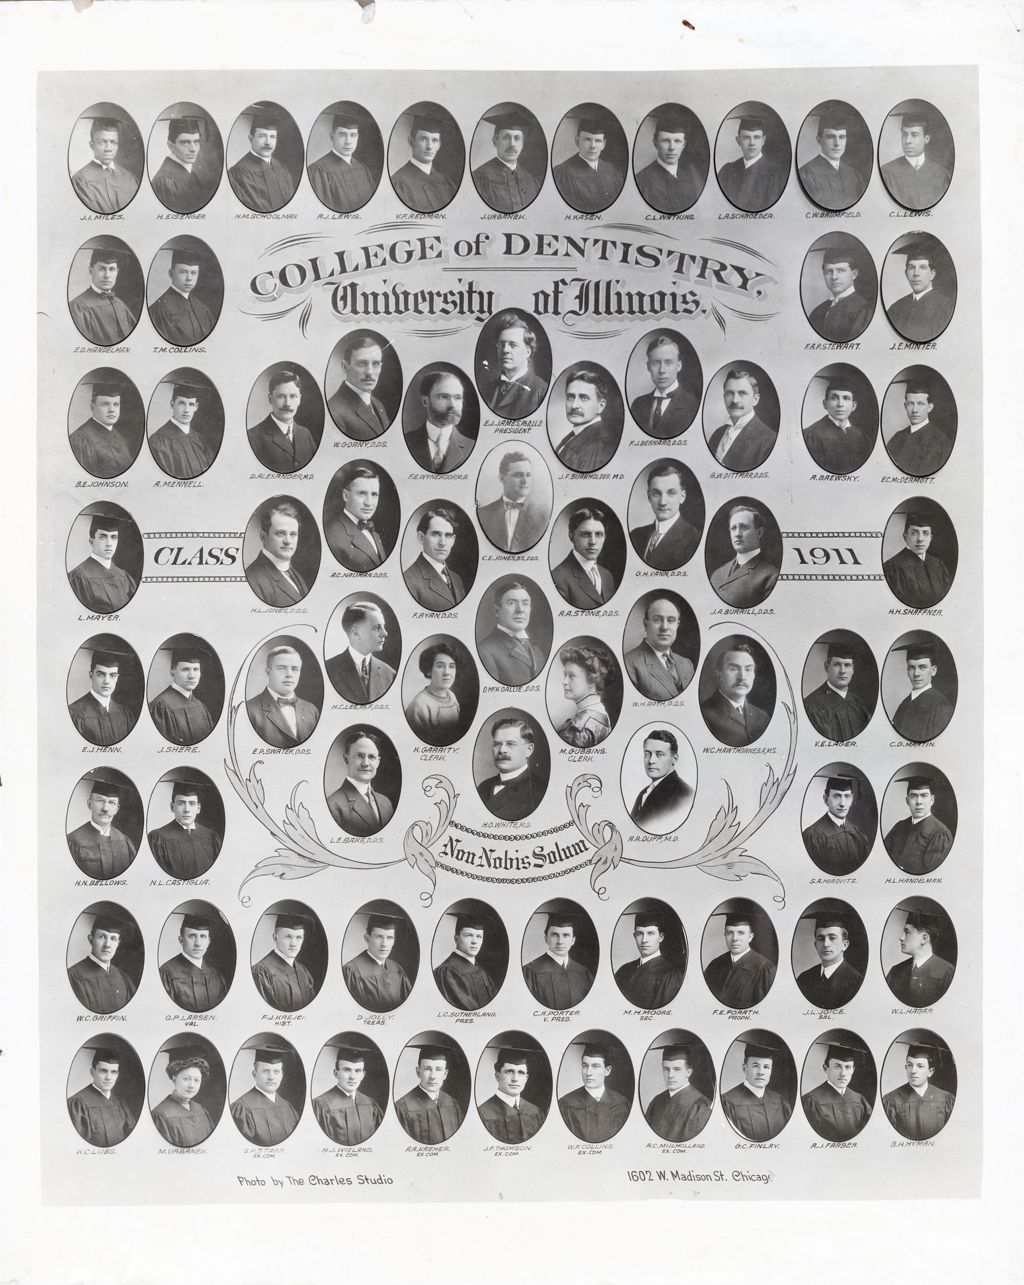 1911 graduating class, University of Illinois College of Dentistry